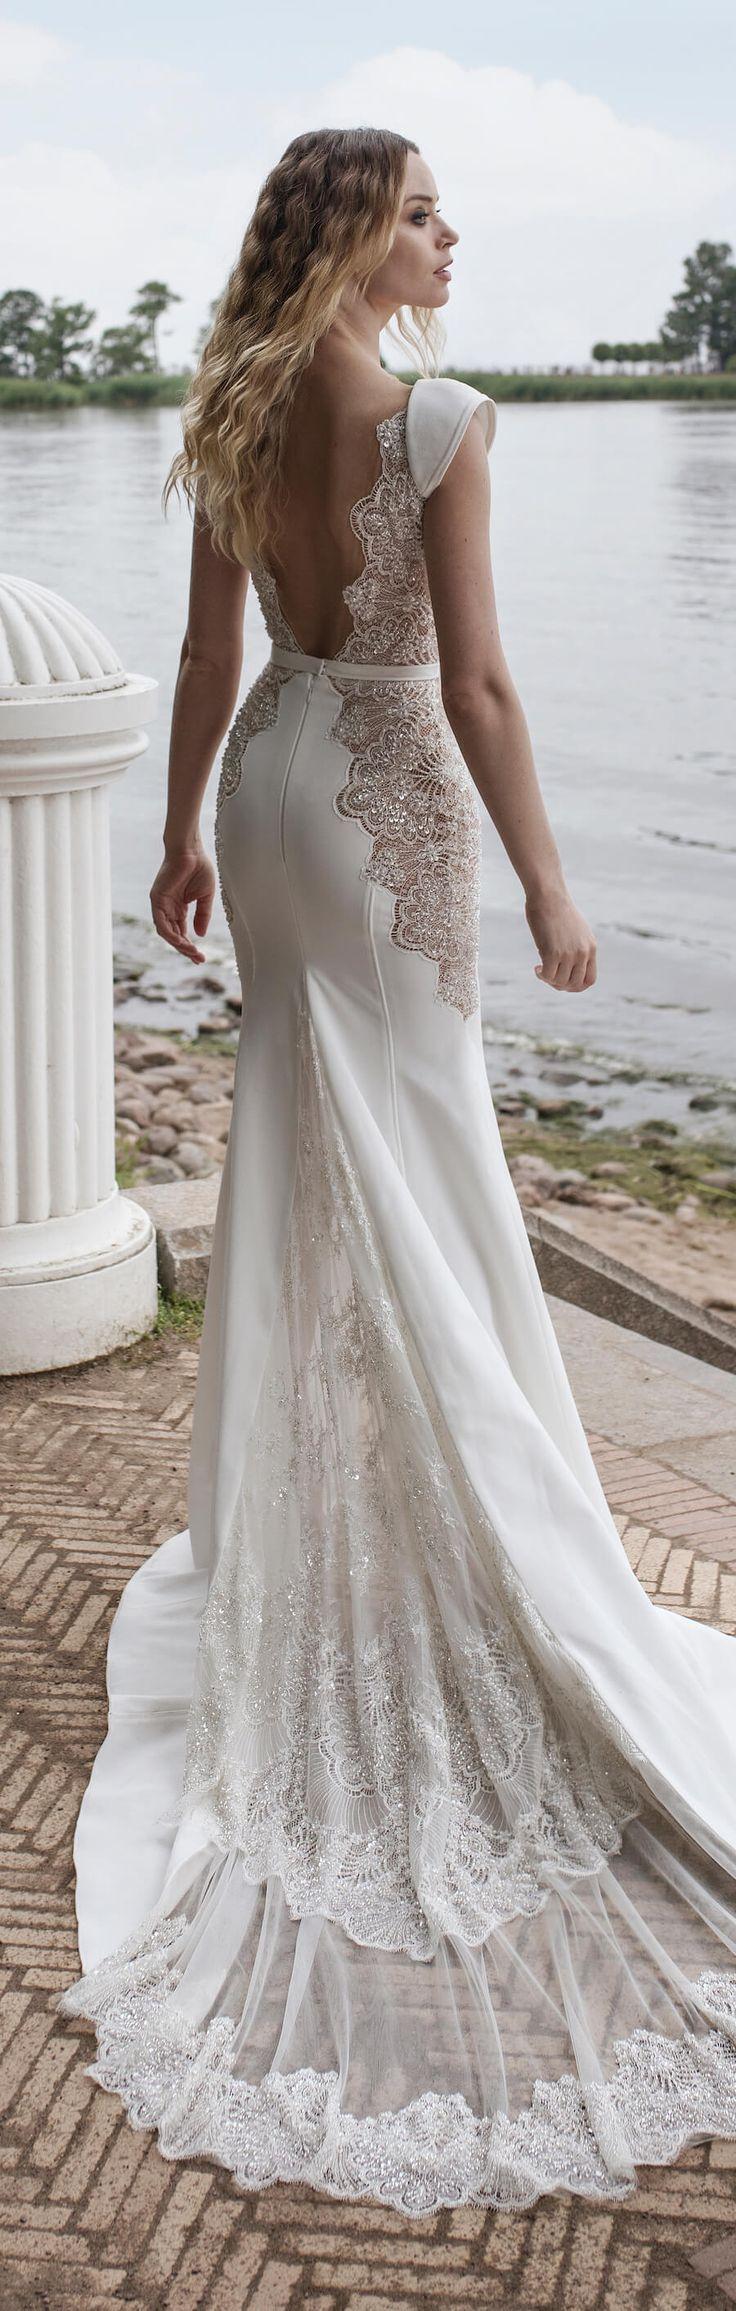 Wedding - Lian Rokman Wedding Dresses 2018: Stardust Bridal Collection